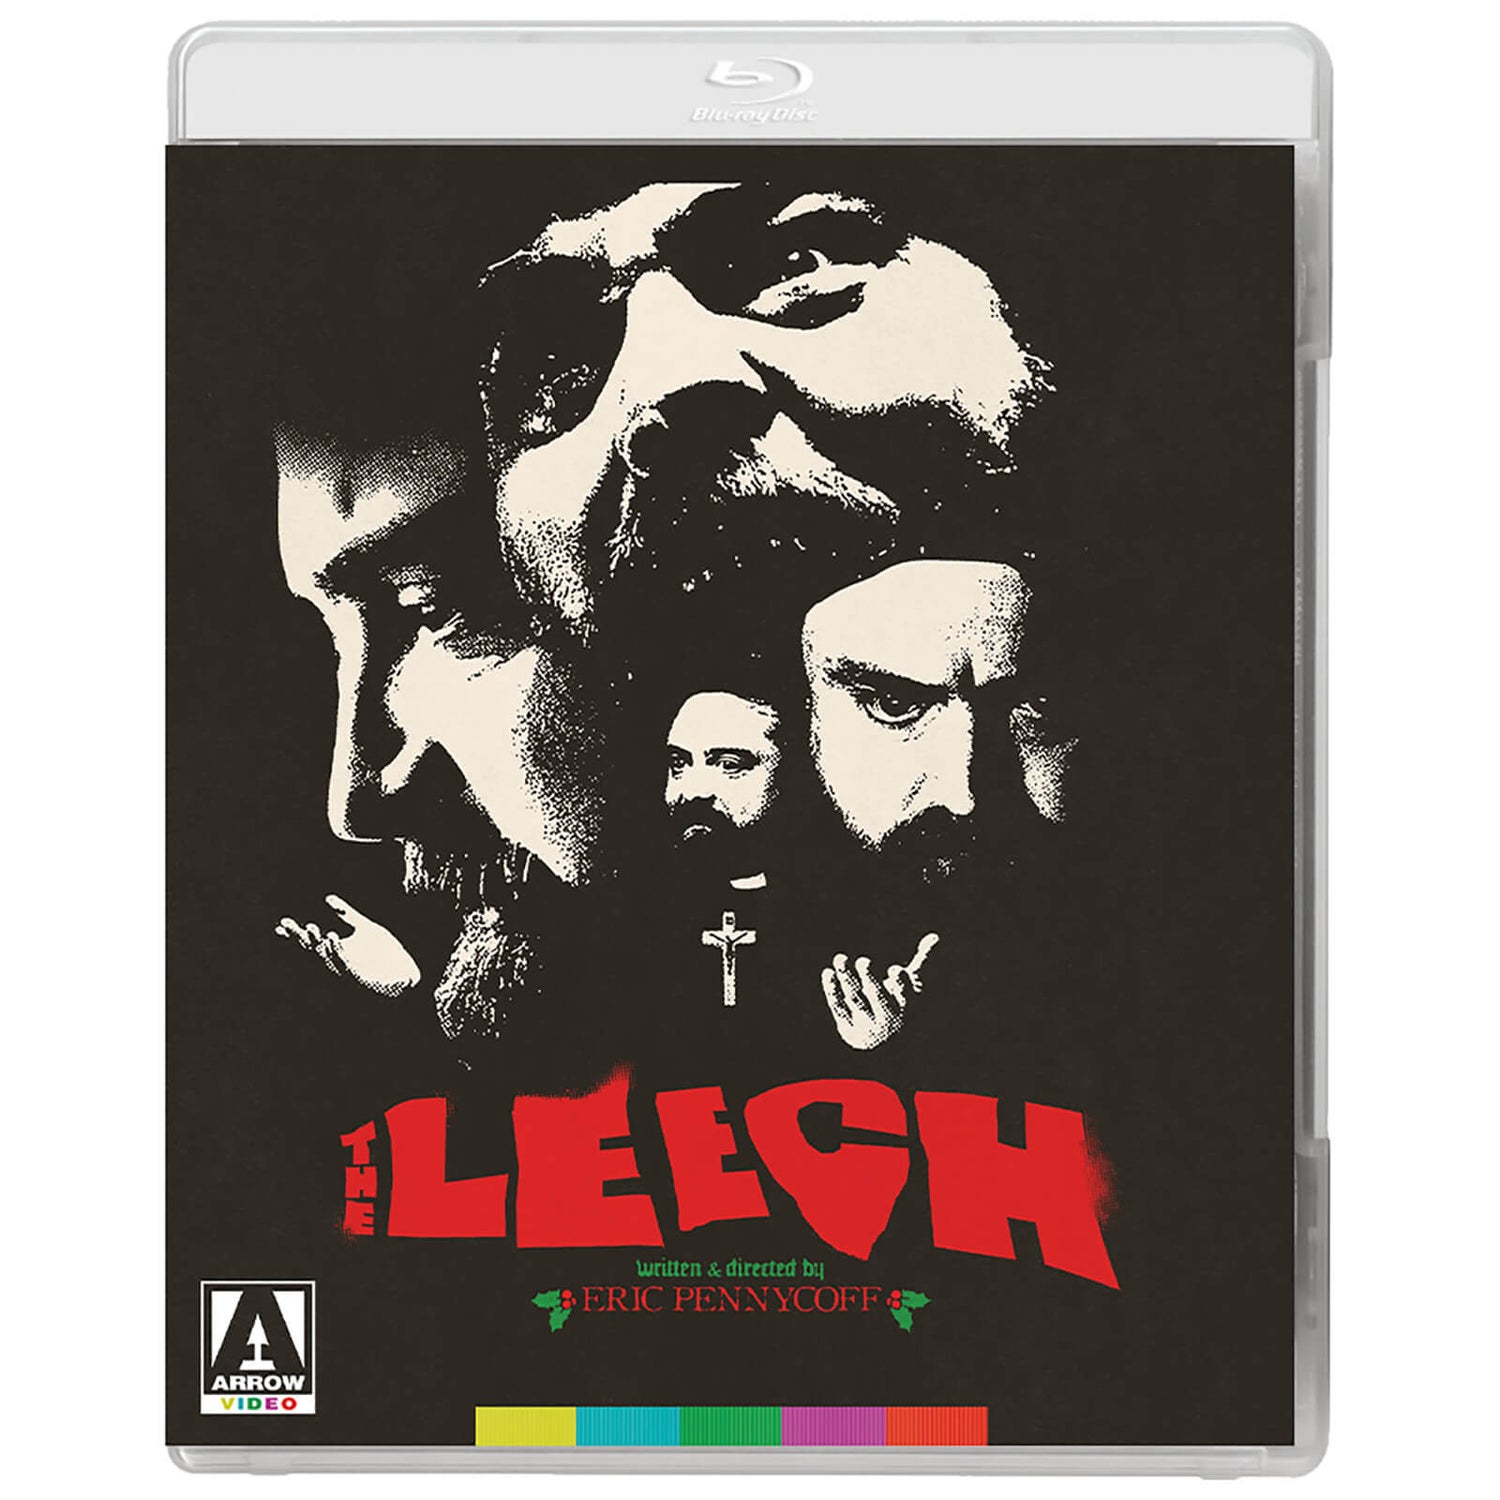 The Leech Blu-ray